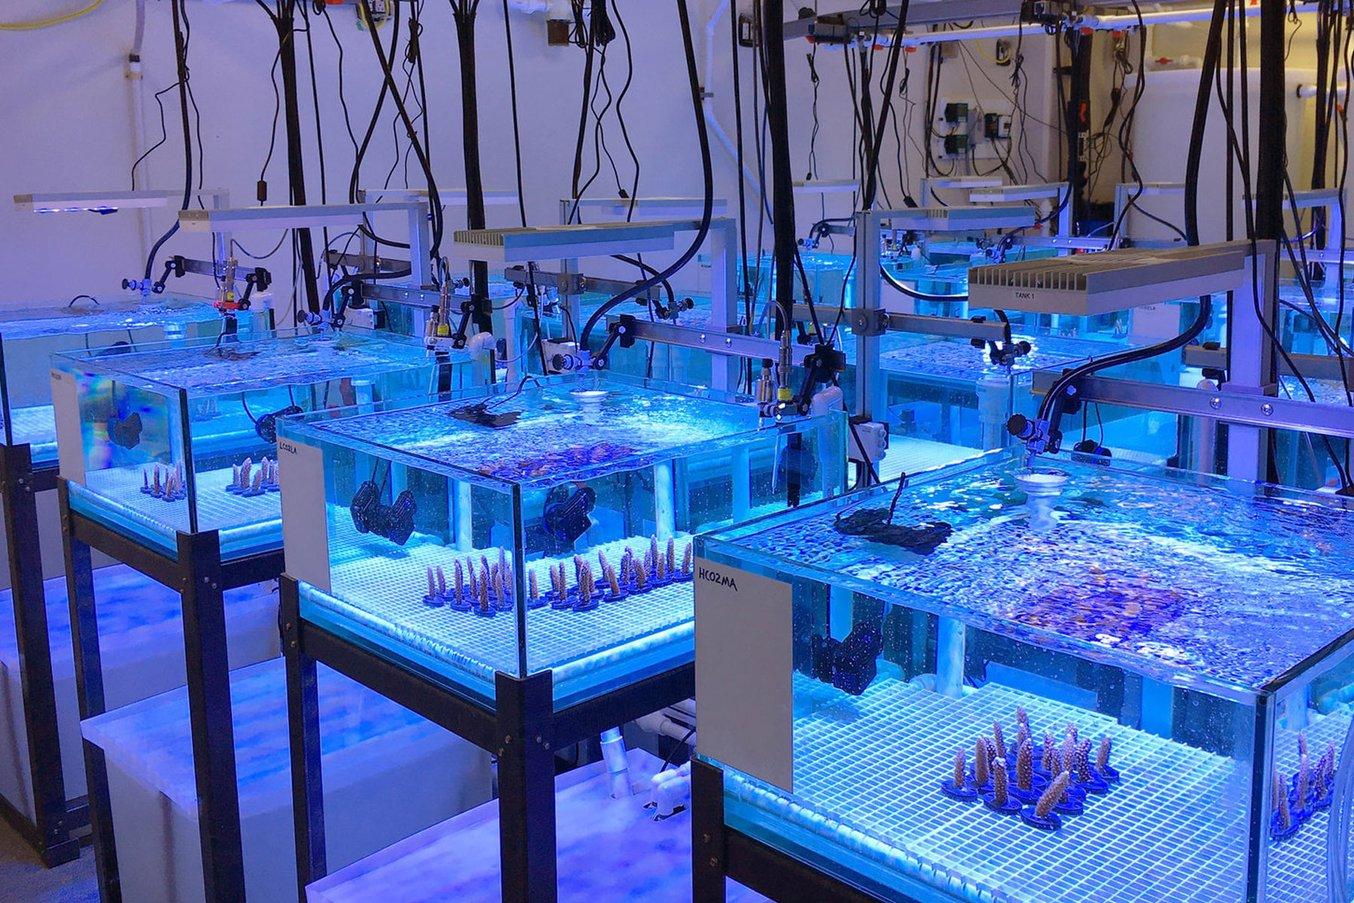 the NOAA experimental reef lab